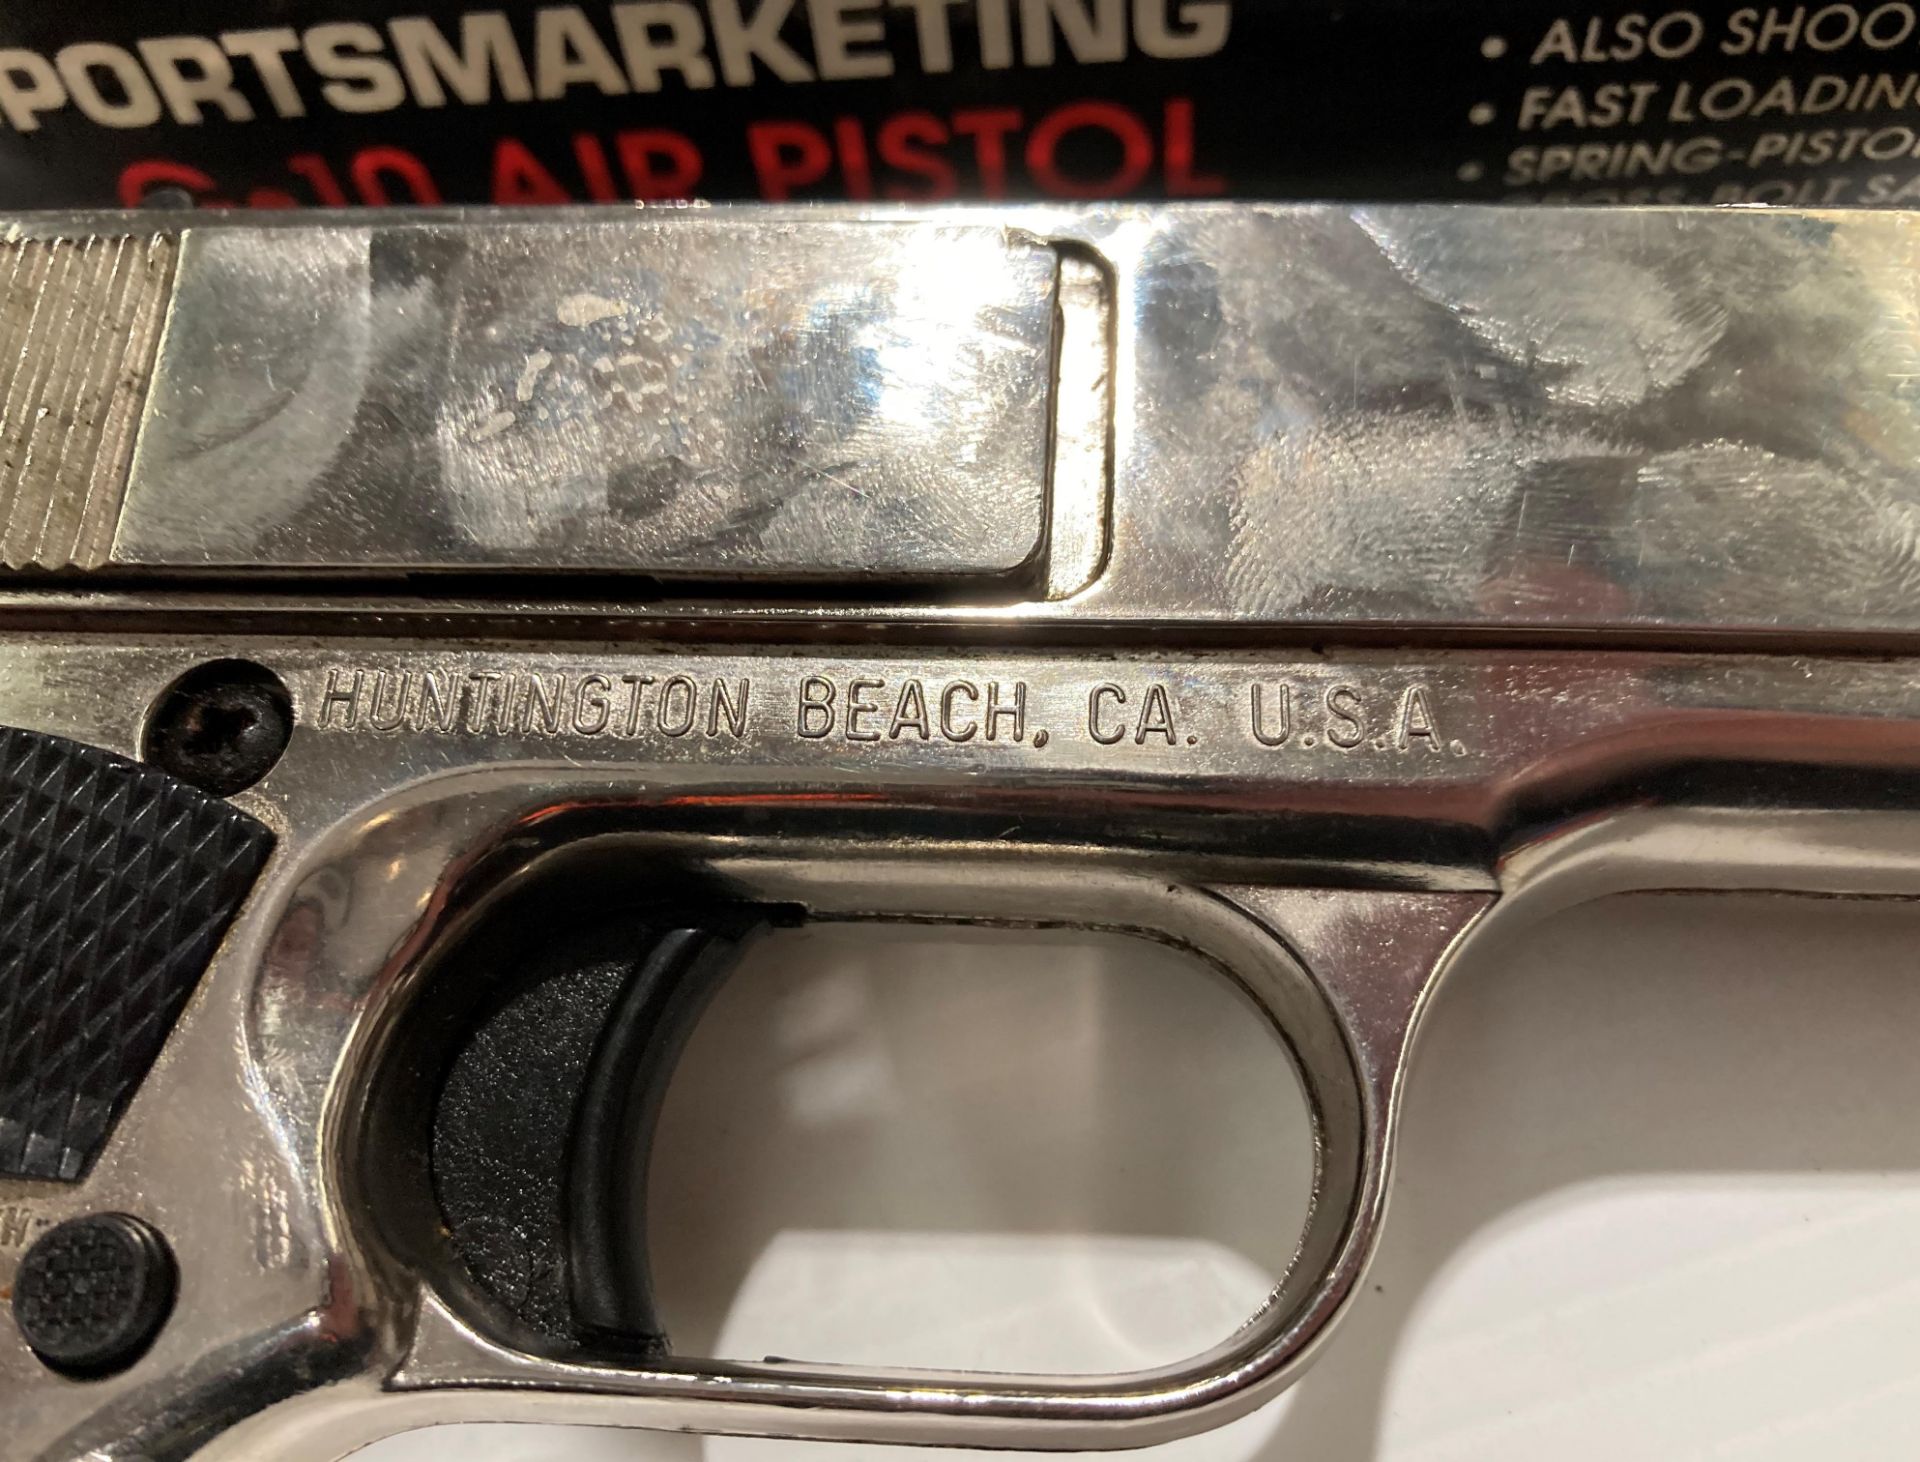 A Sportsmarketing Huntington Beach Ca USA G.10 18 shot BB repeater . - Image 3 of 4